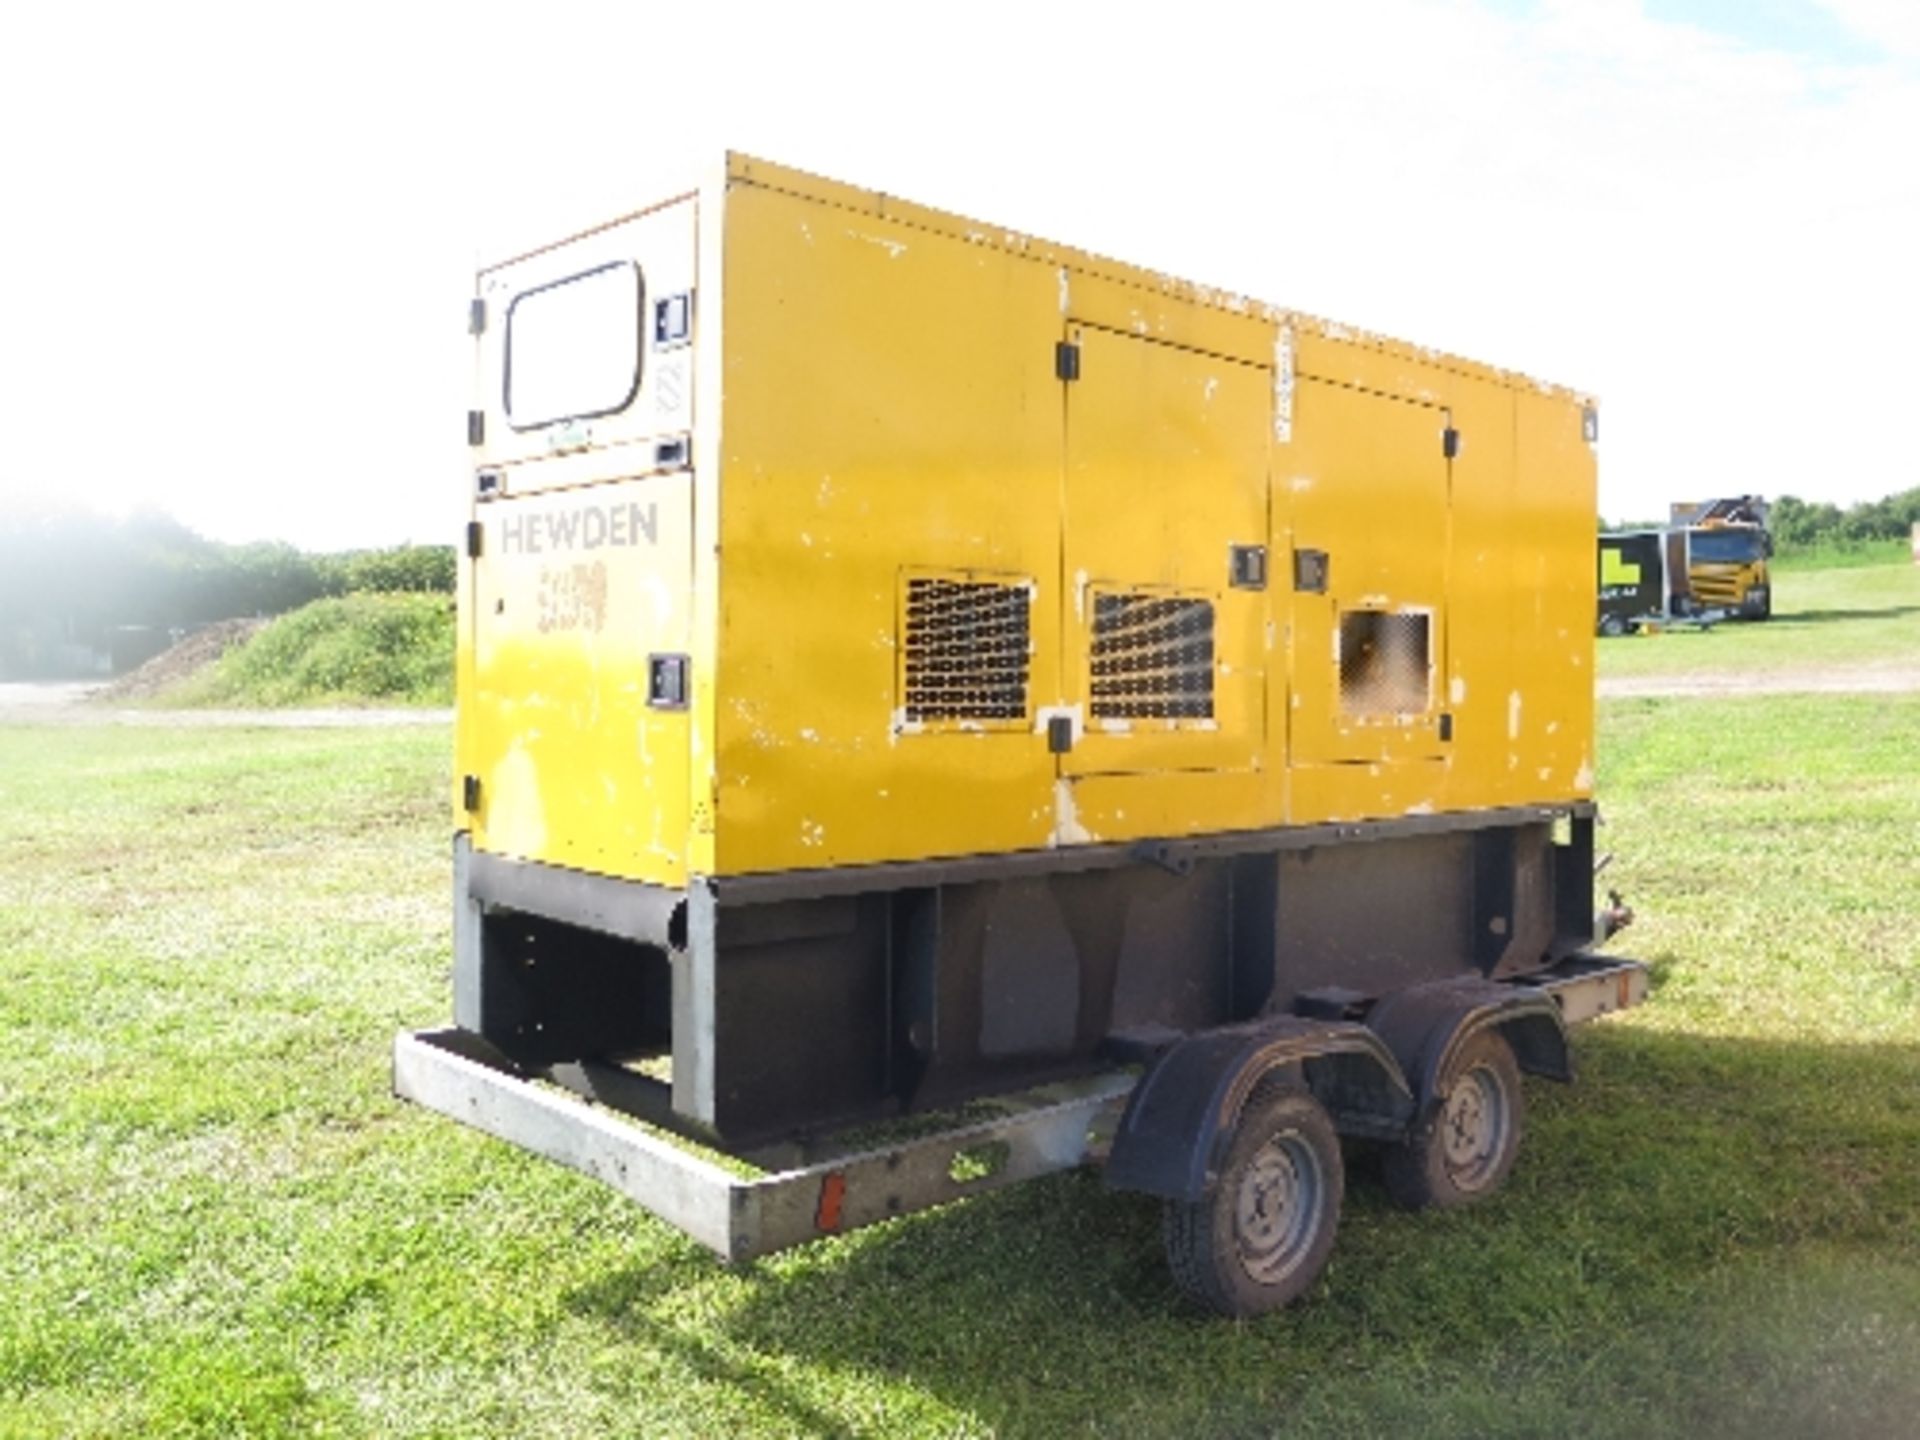 Caterpillar XQE100 trailer mounted generator 22493 hrs 138829
PERKINS - RUNS AND MAKES POWER
ALL